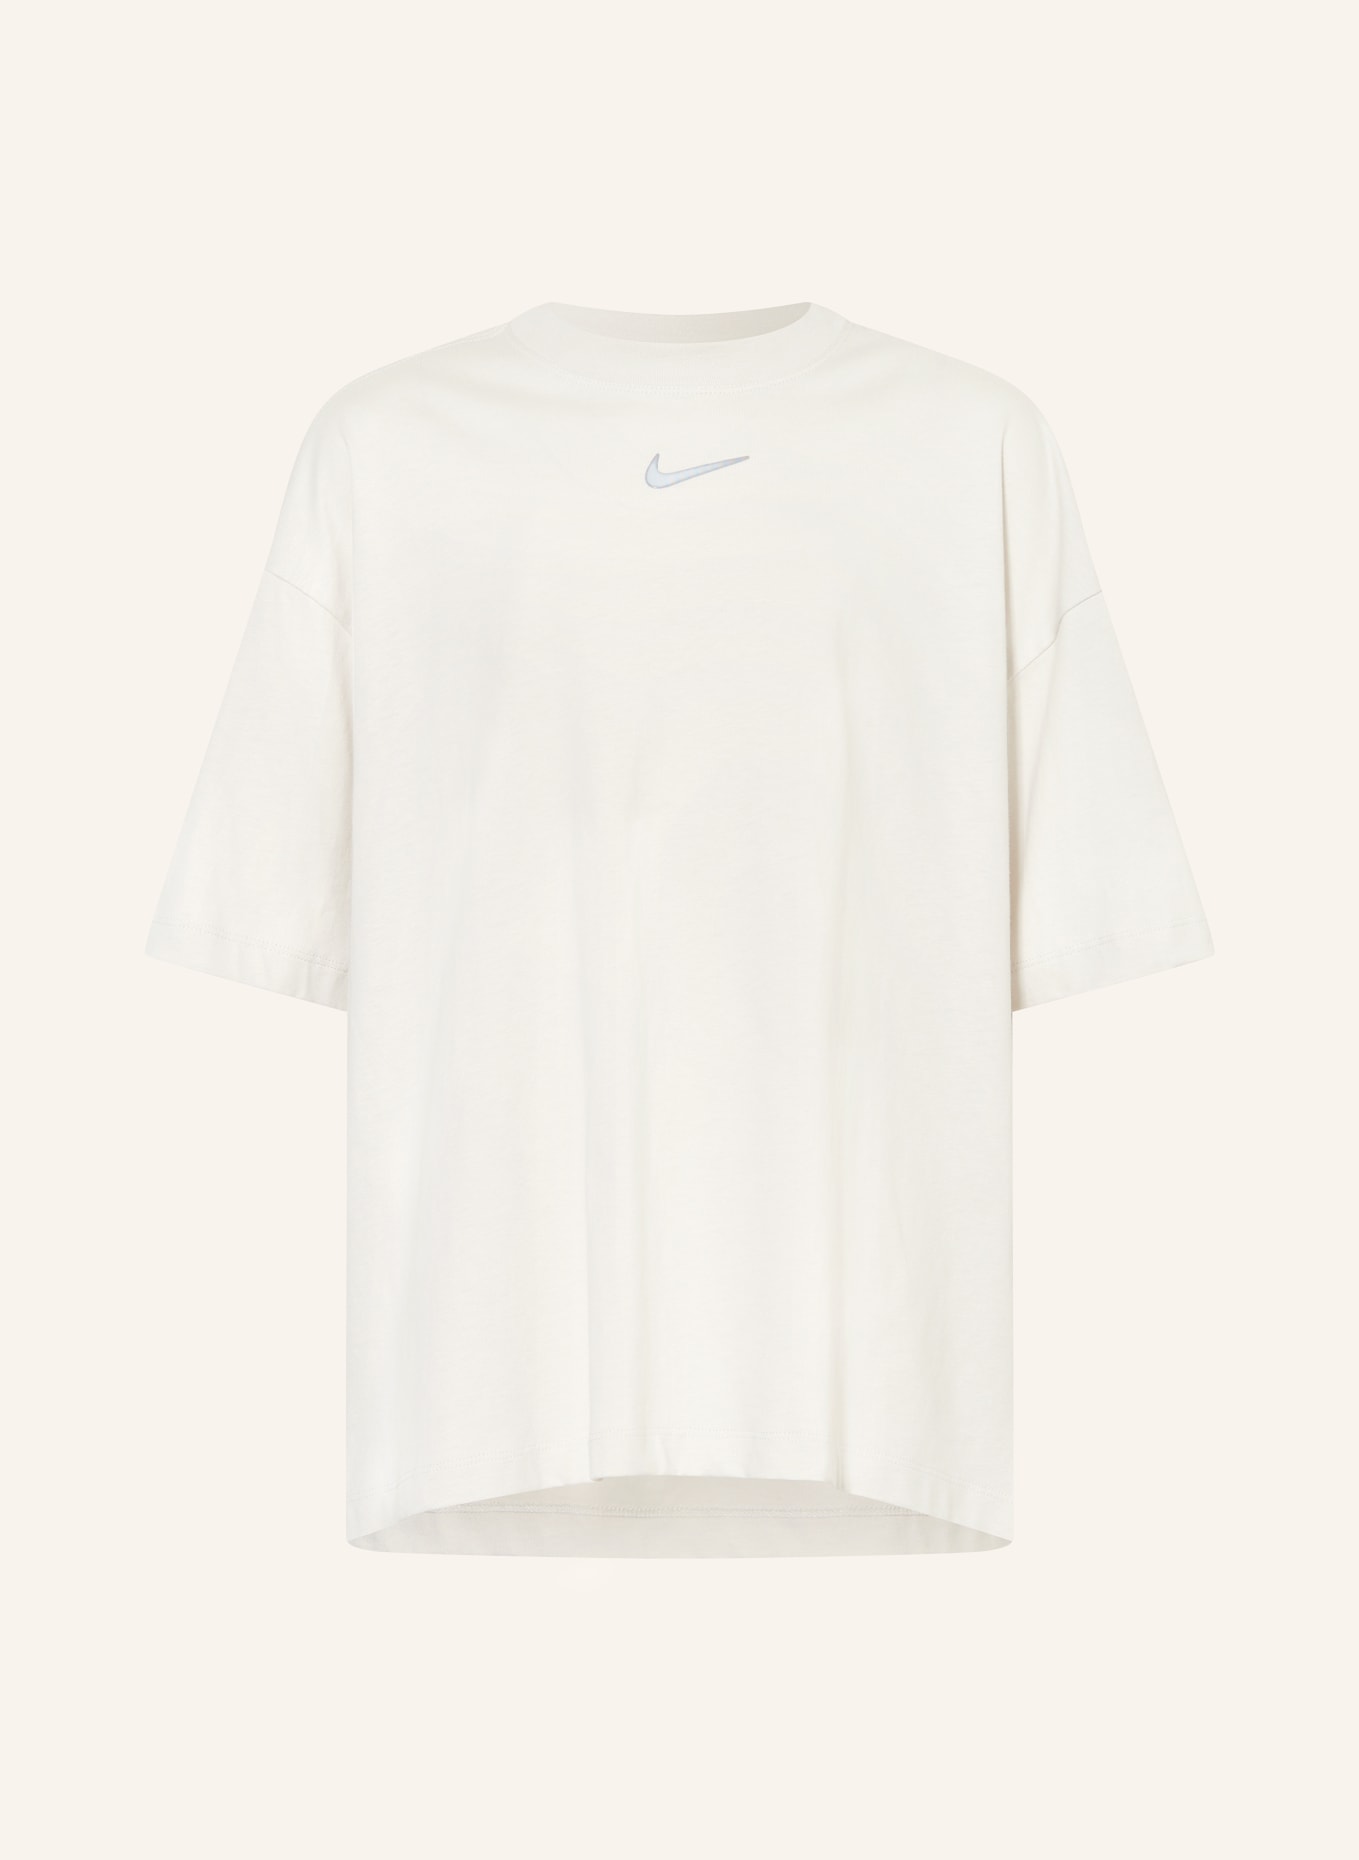 Nike T-Shirt SPORTSWEAR, Farbe: HELLGRAU (Bild 1)